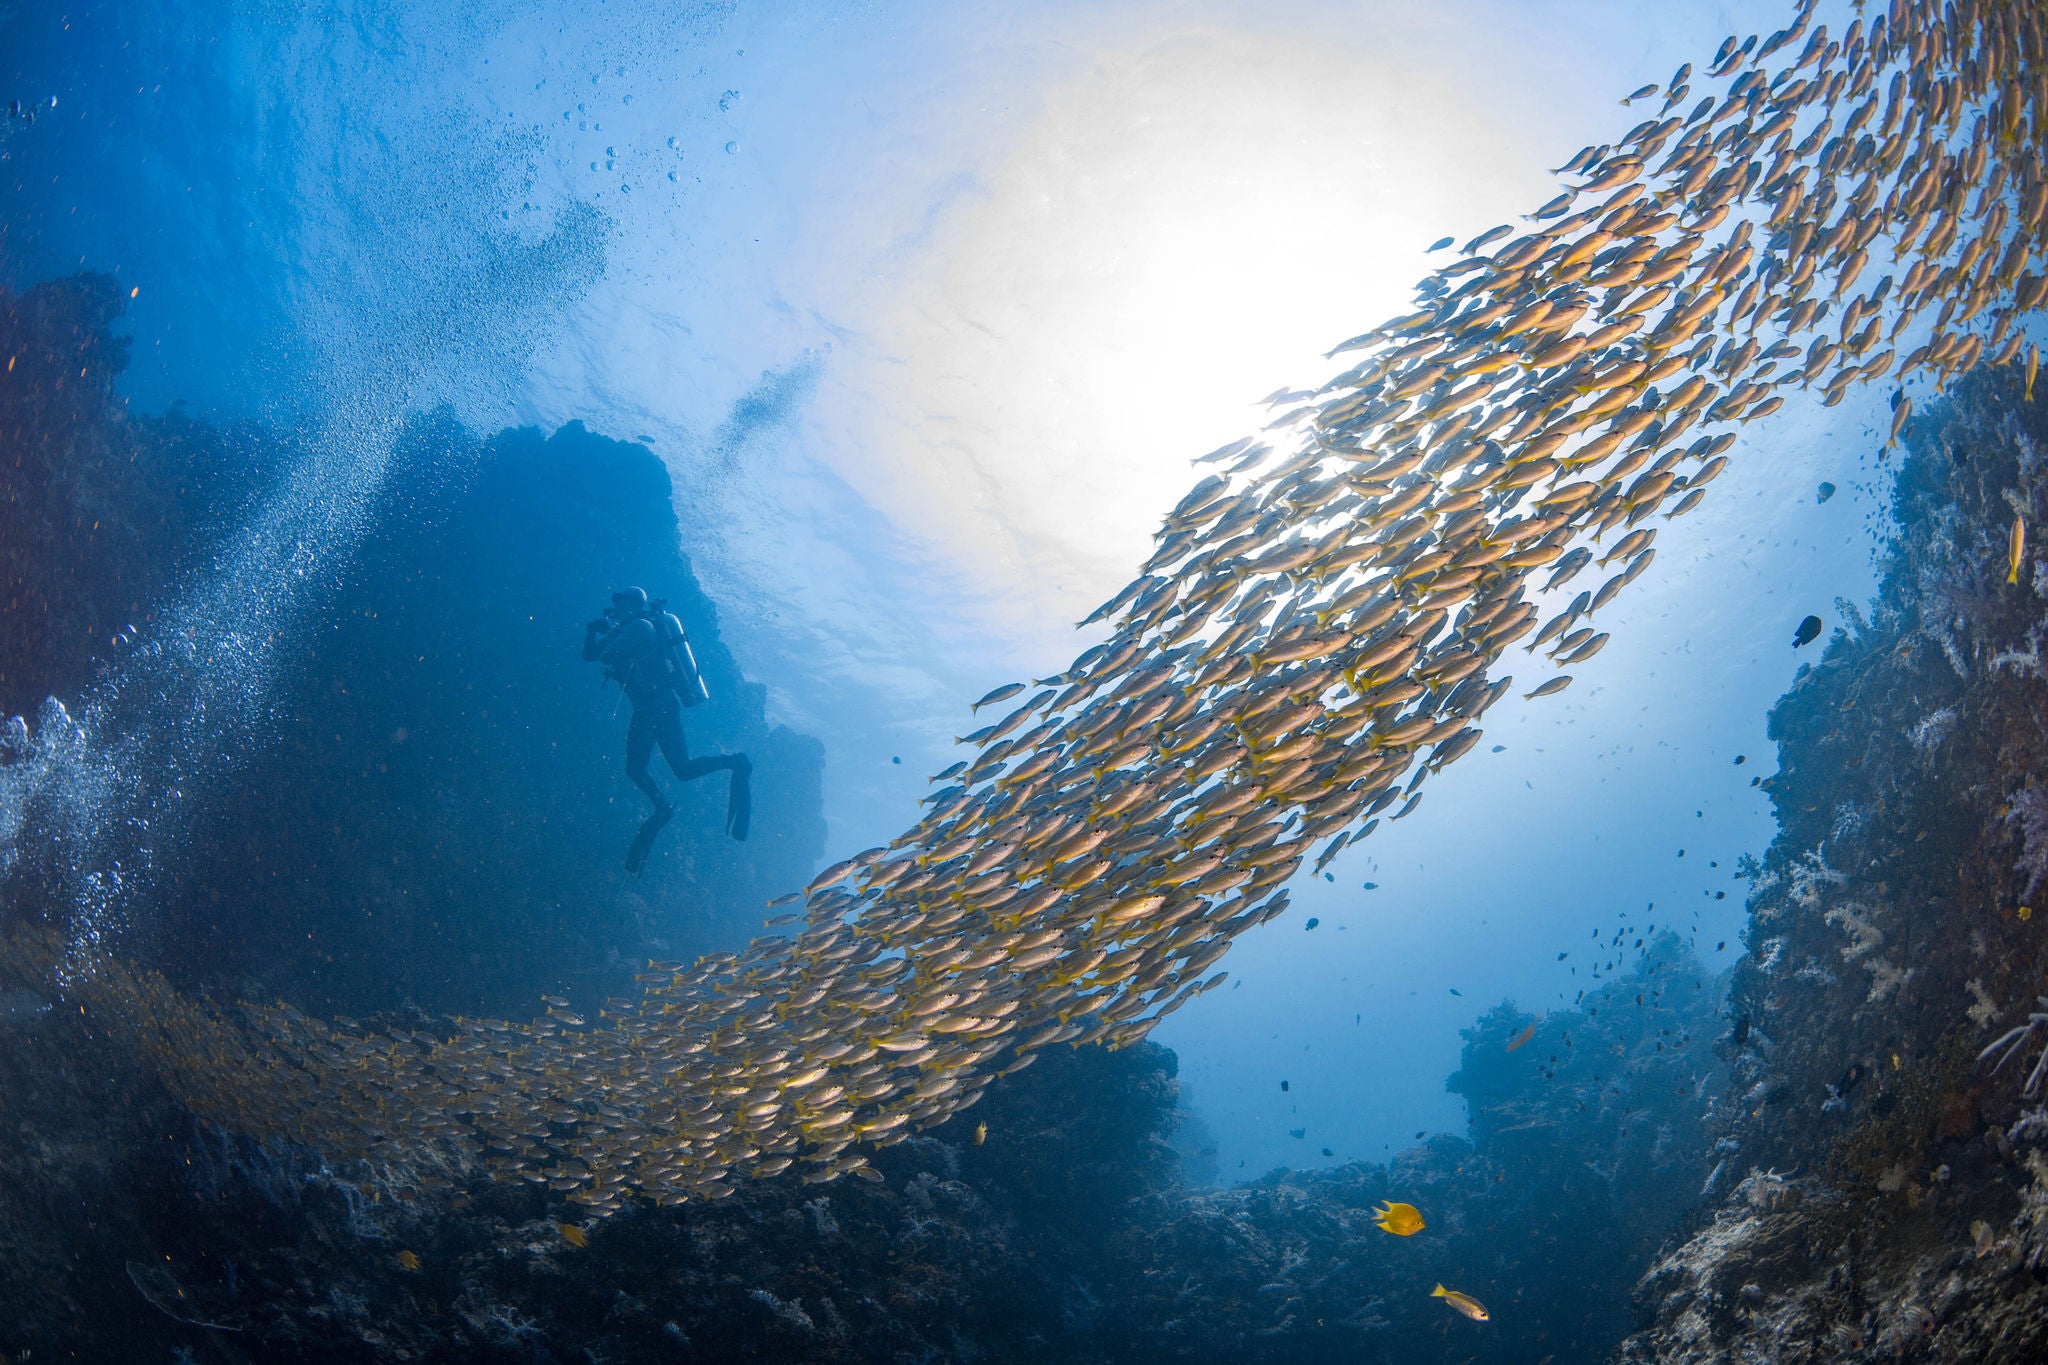 A scuba diver gracefully swims amidst a vast school of fish